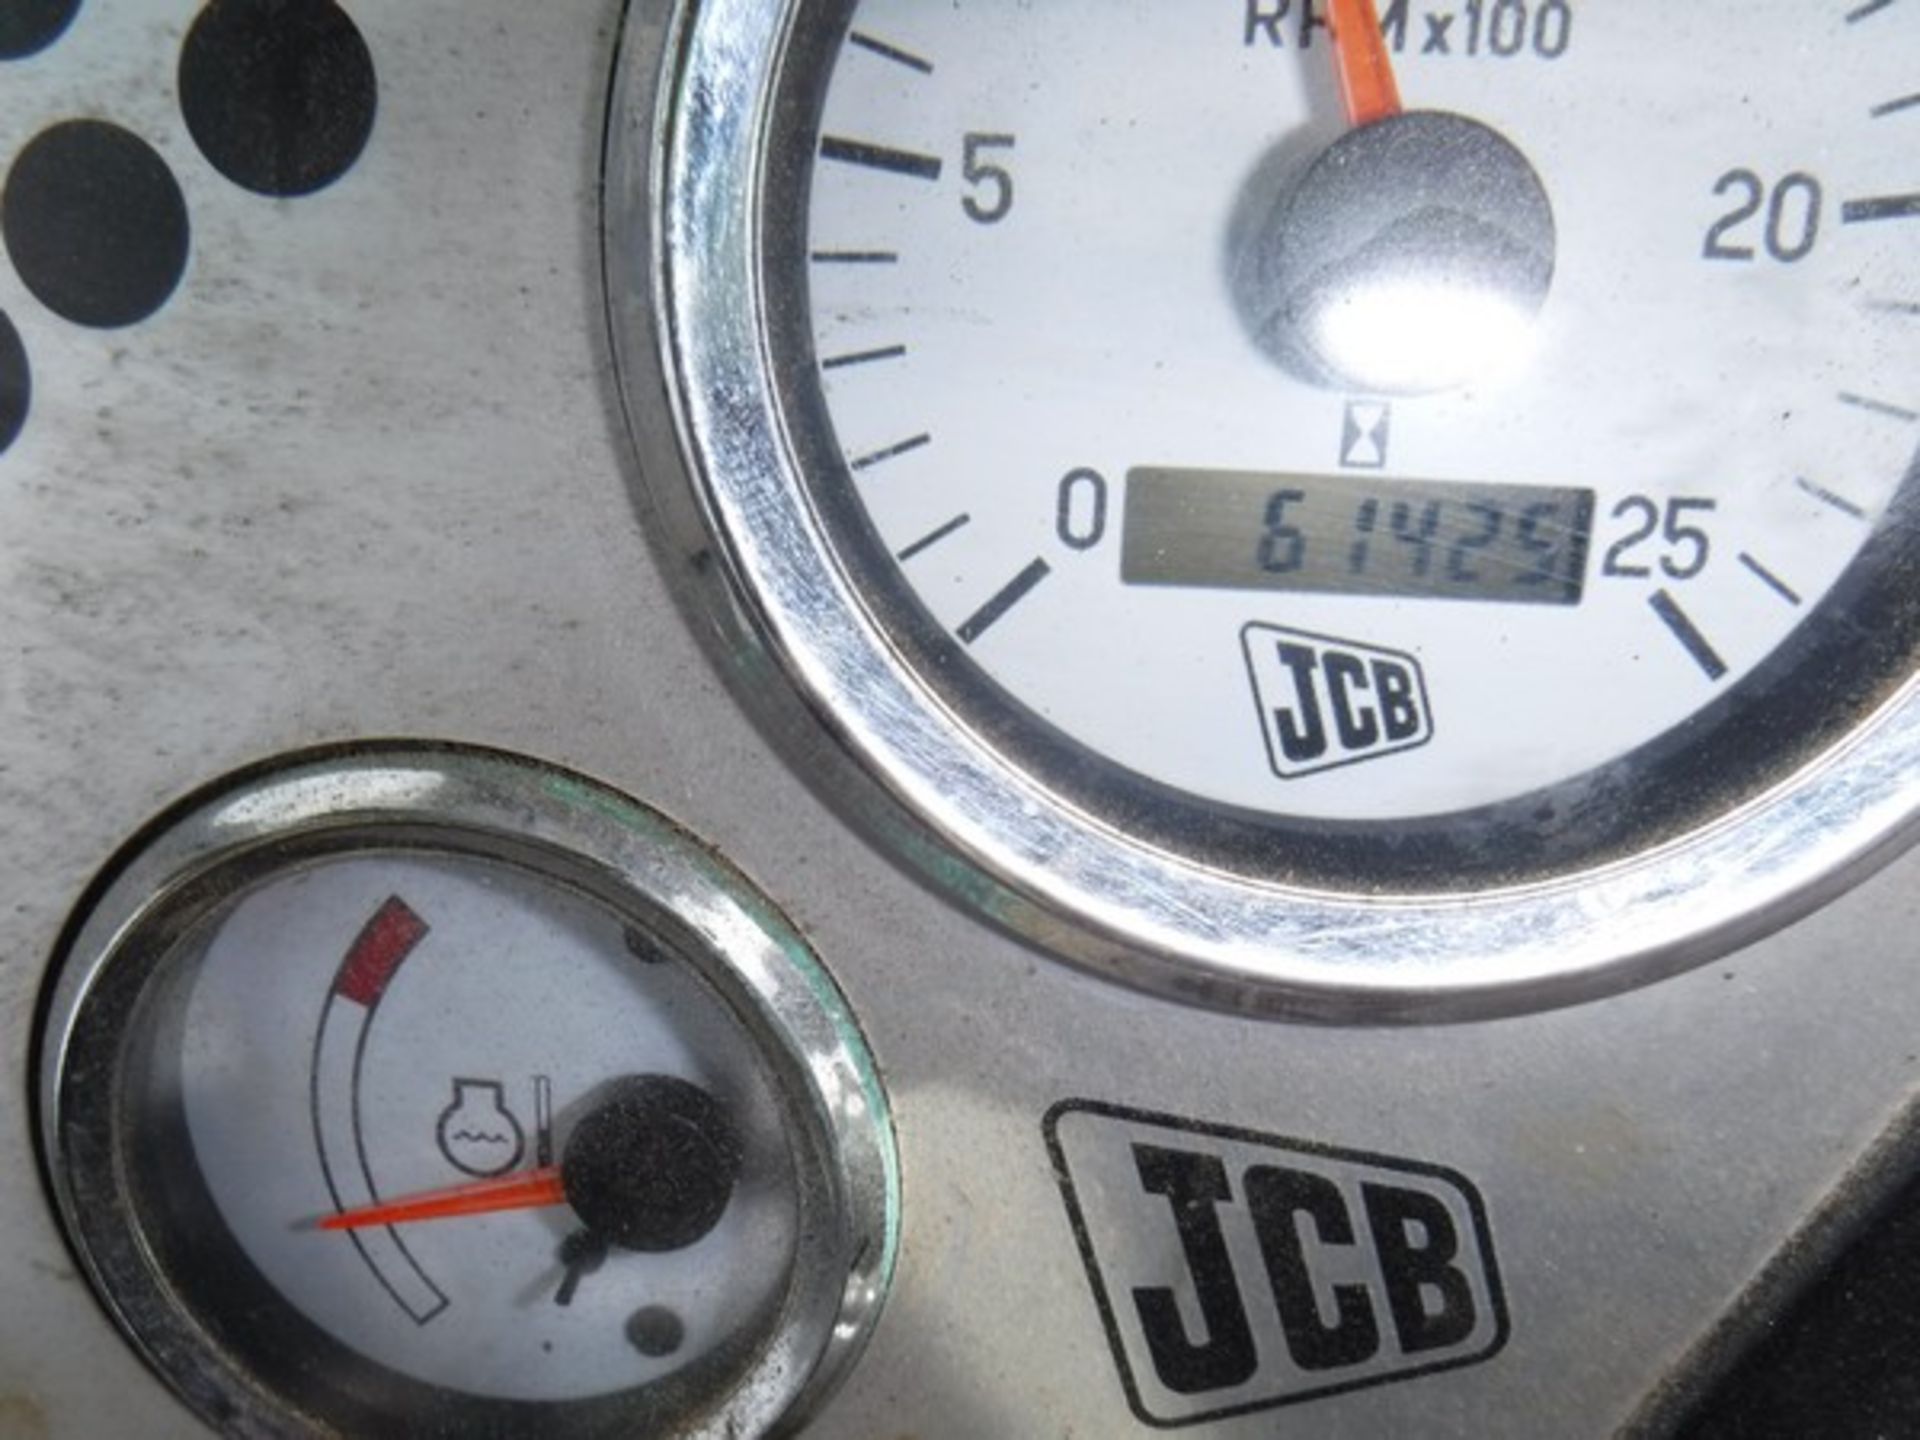 2006 JCB 3CX backhoe loader c/w 1 rear bucket & 1 front bucket.. Reg - SV55 FPD. S/N 0967334. 6142hr - Image 8 of 17